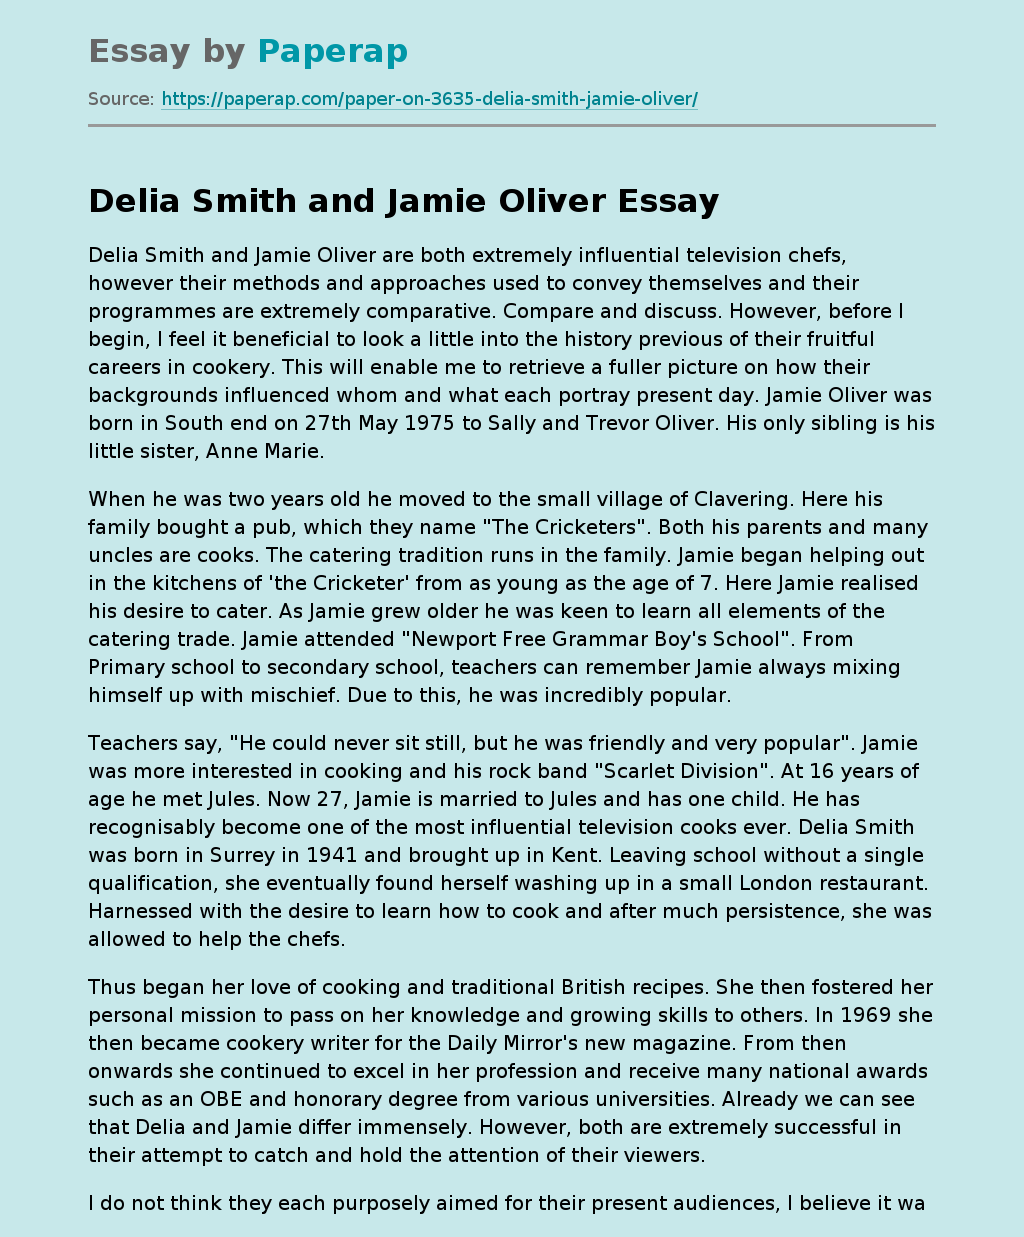 Delia Smith and Jamie Oliver